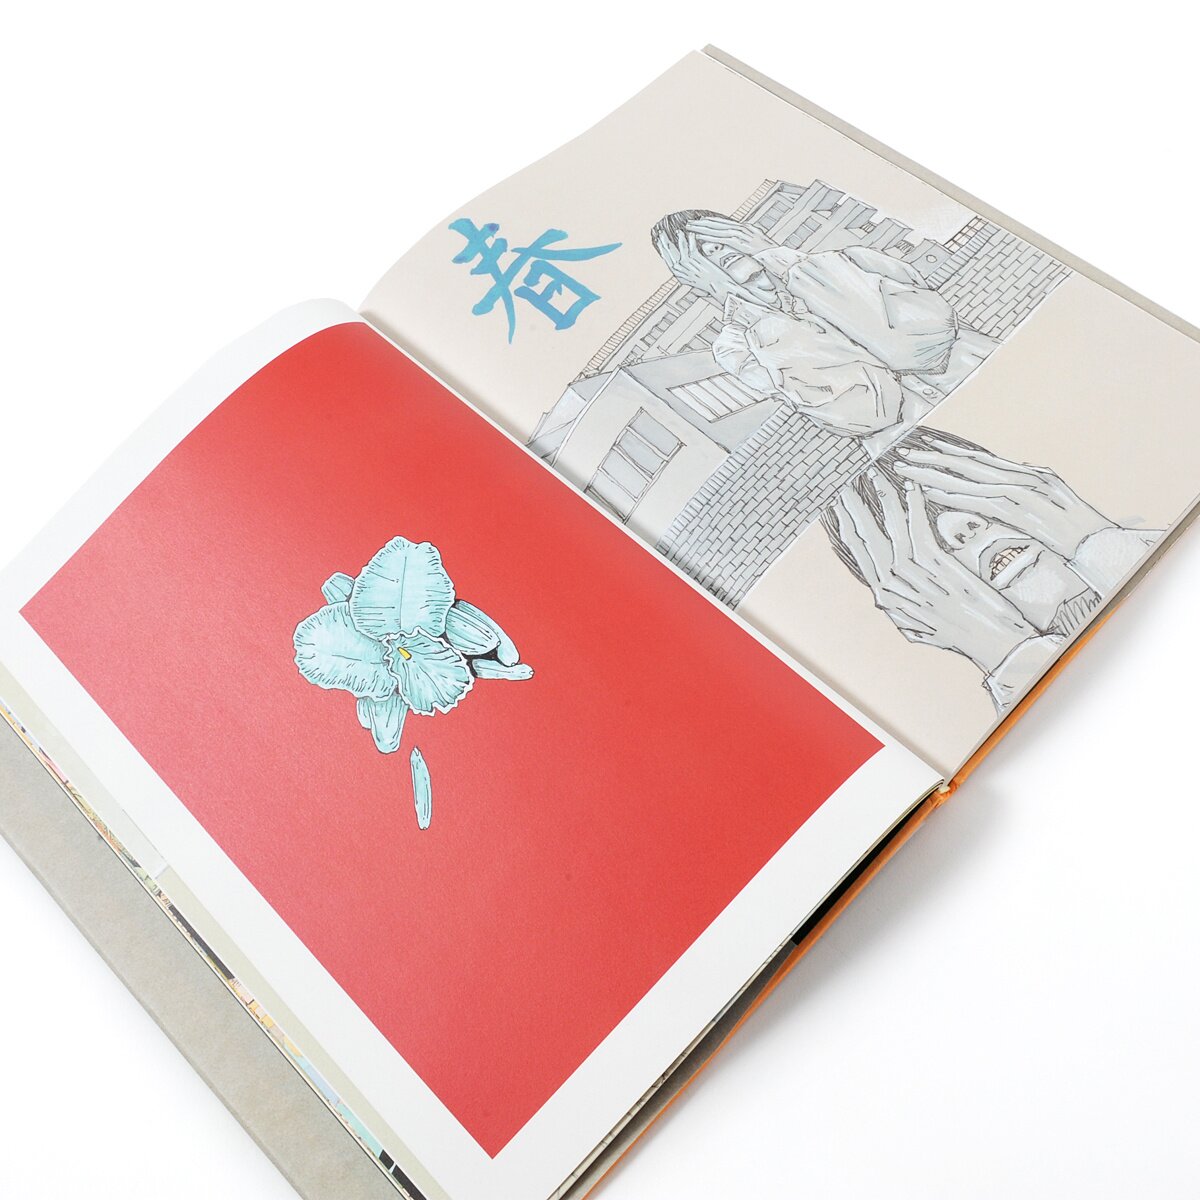 Ping Pong, Vol. 1 by Taiyo Matsumoto, Paperback